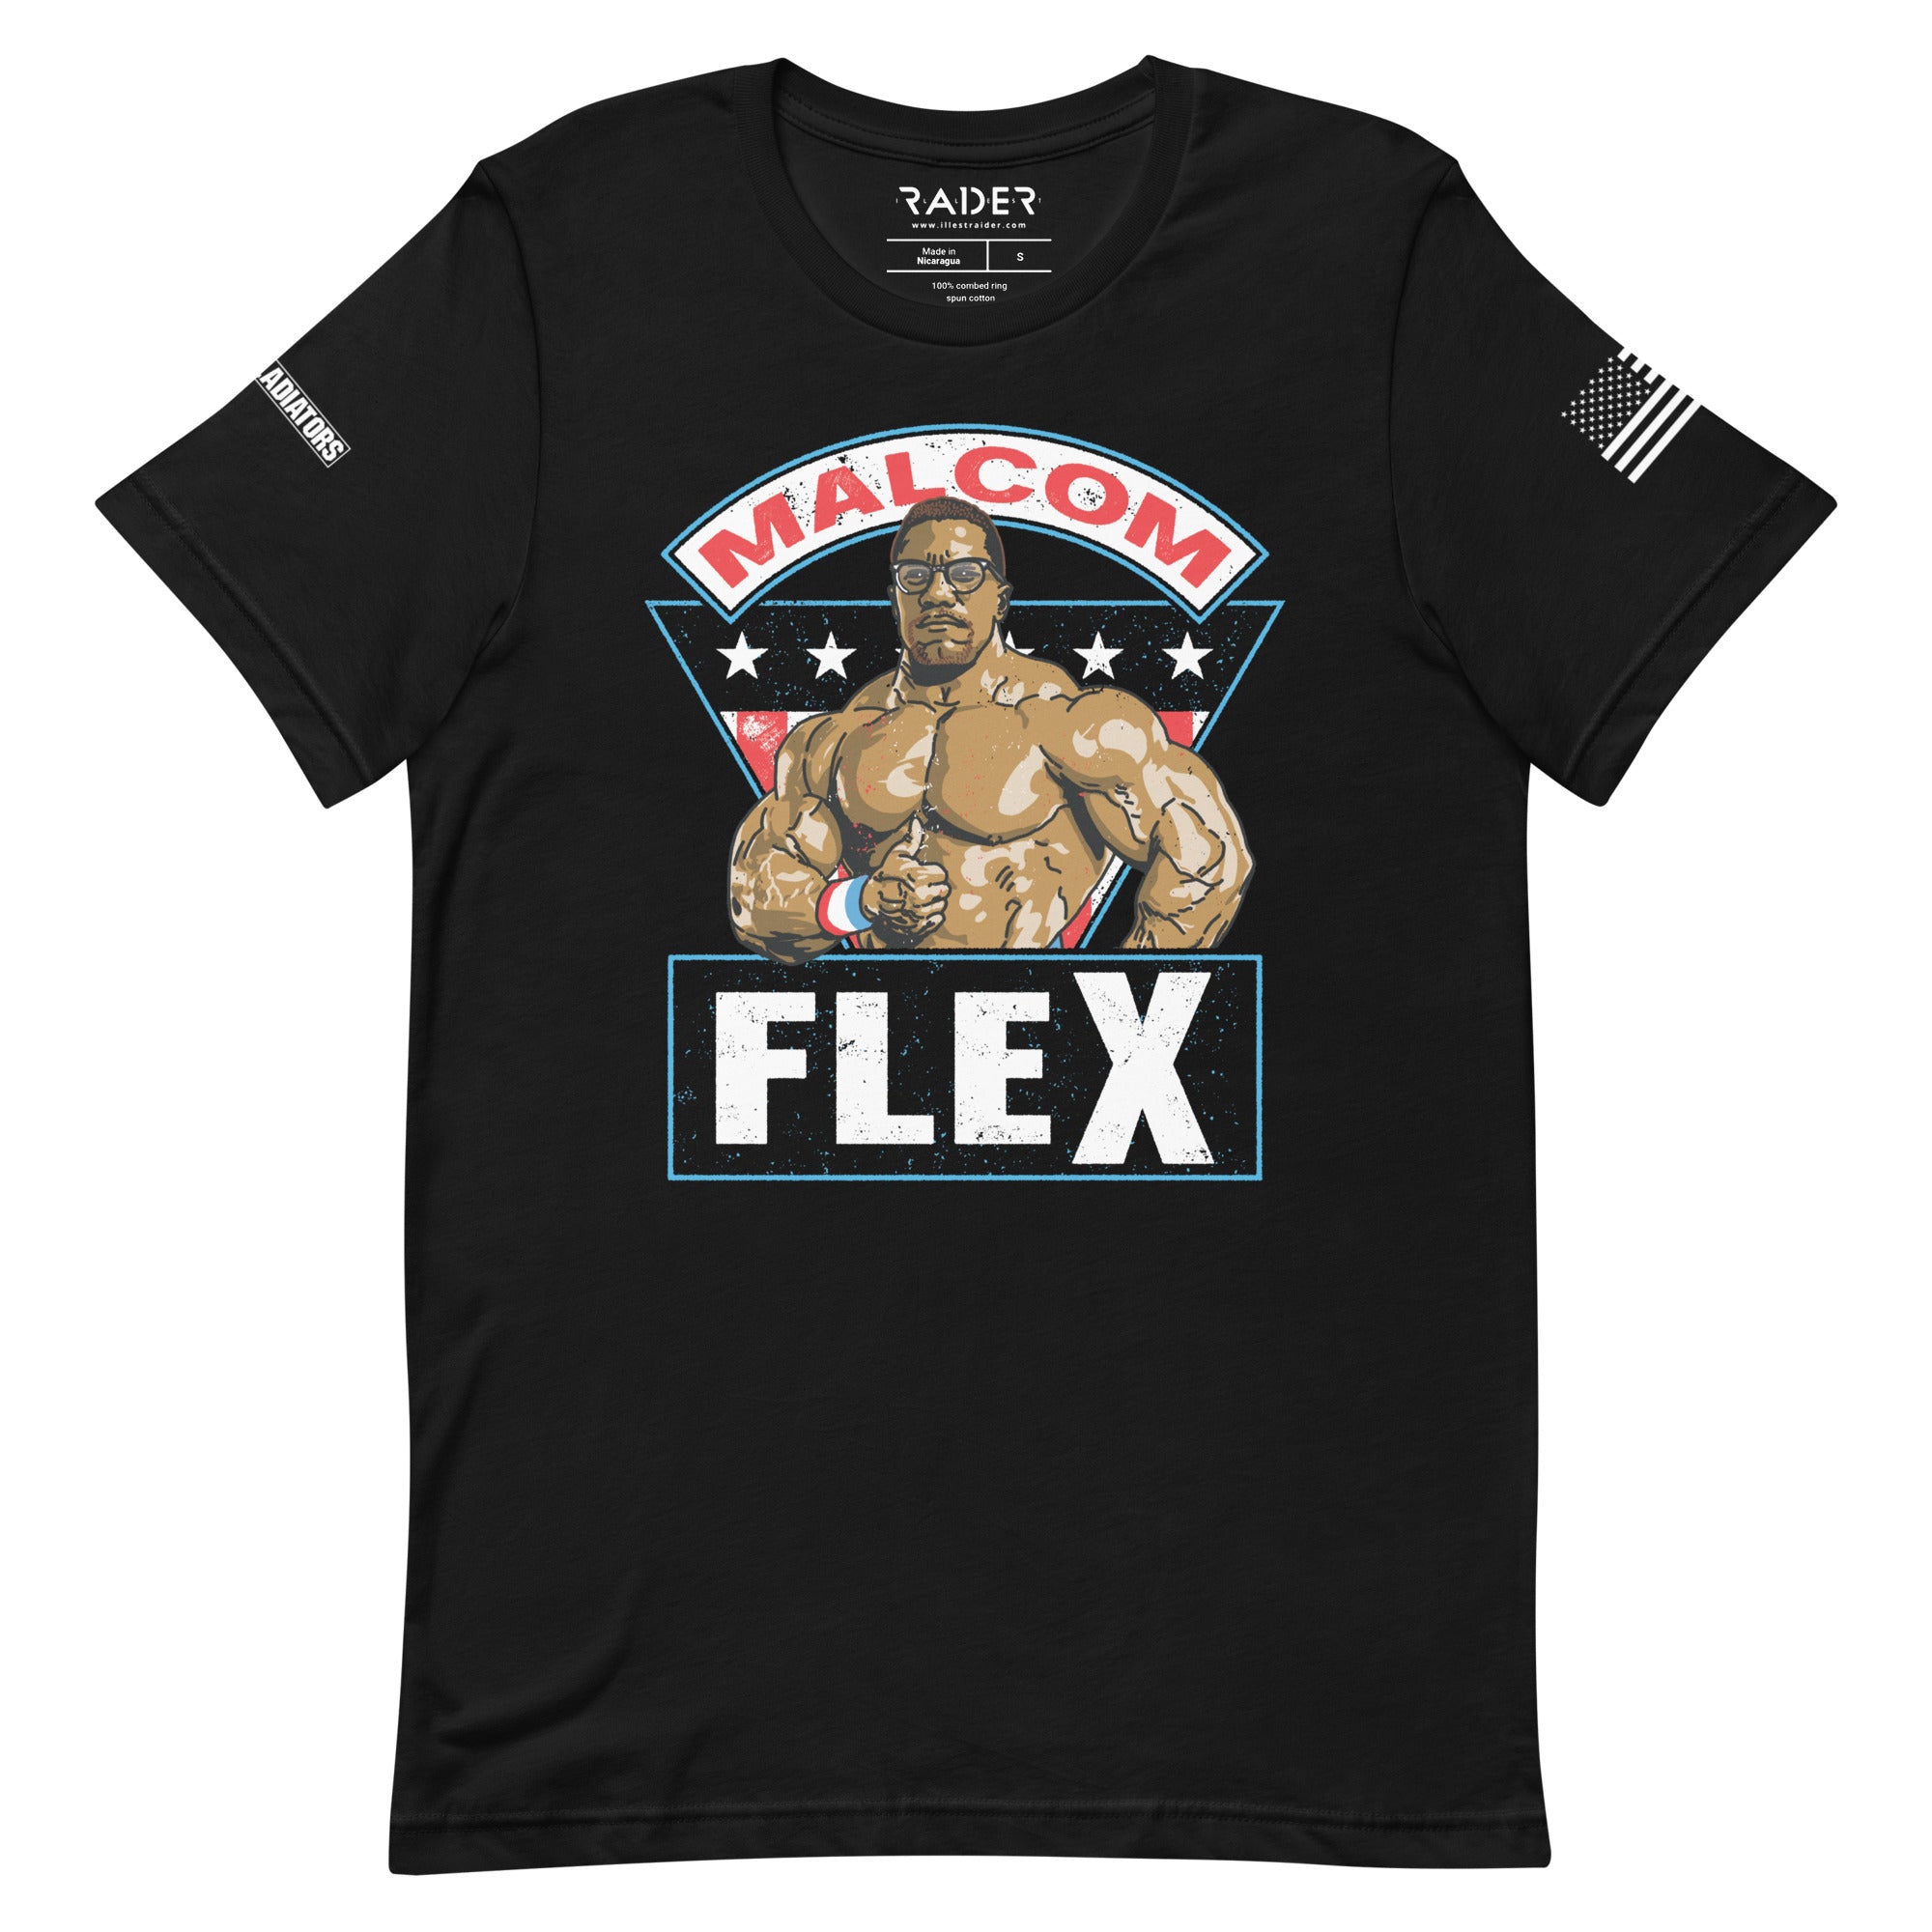 Malcom Flex T-shirt